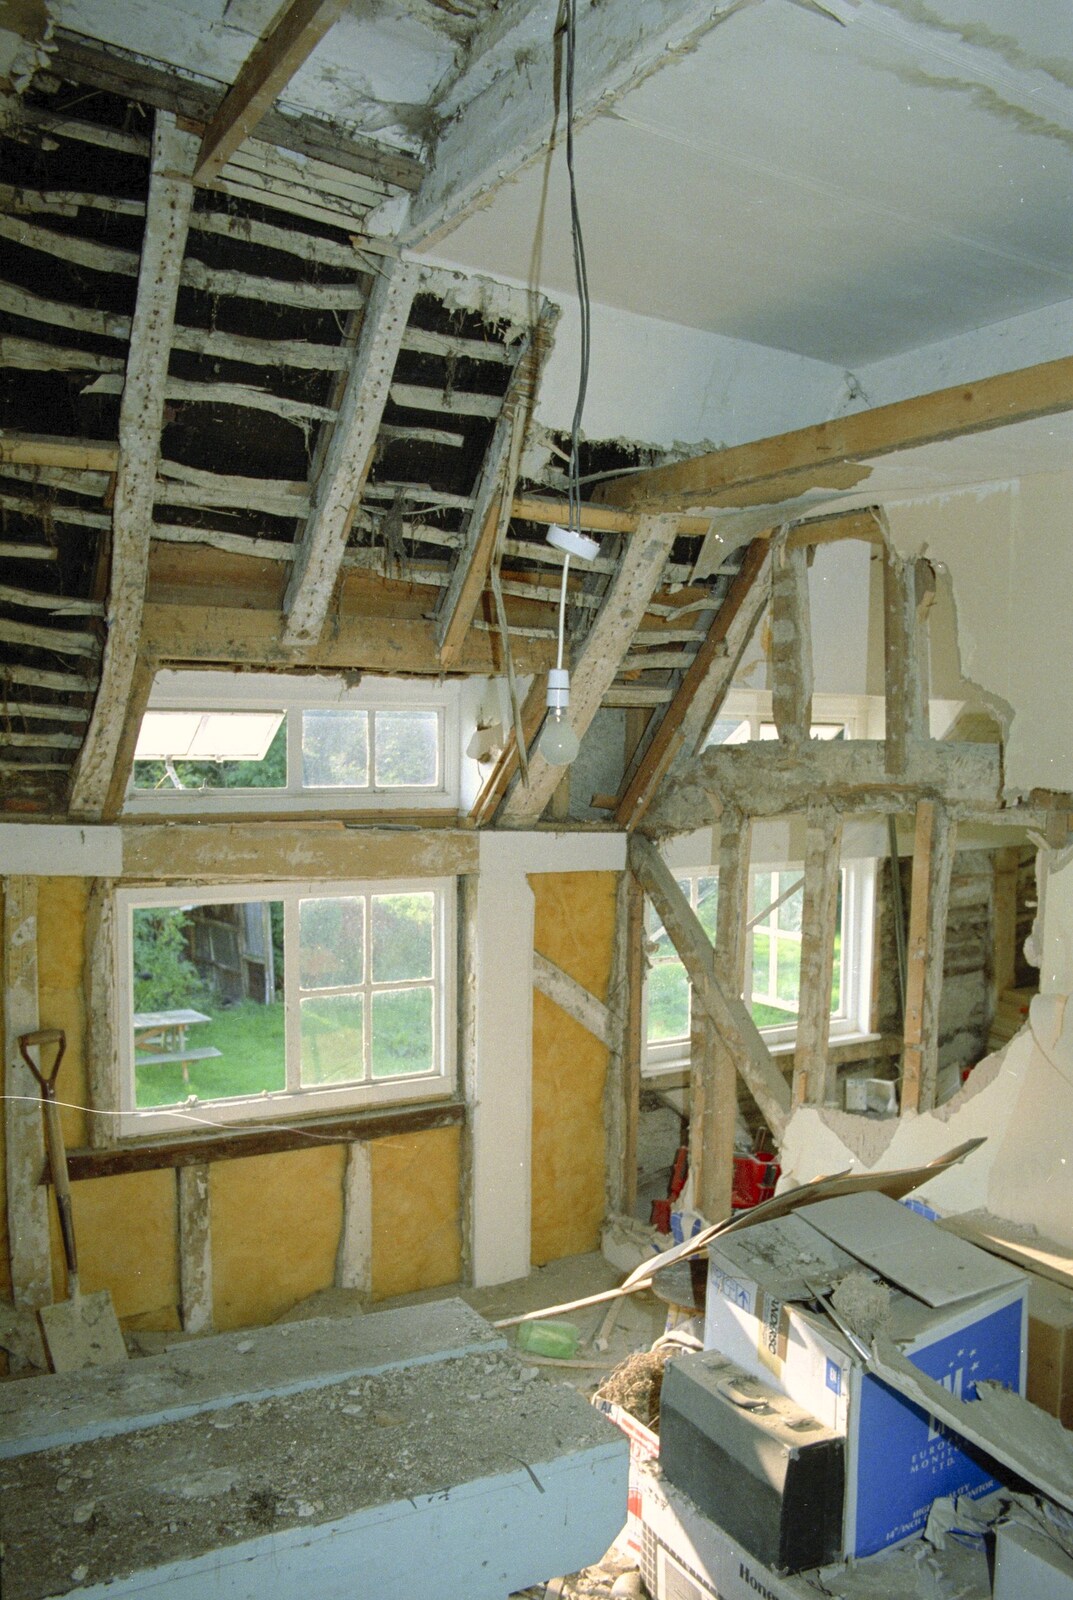 Bedroom demolition in progress from Bedroom Demolition, Brome, Suffolk - 15th May 1995